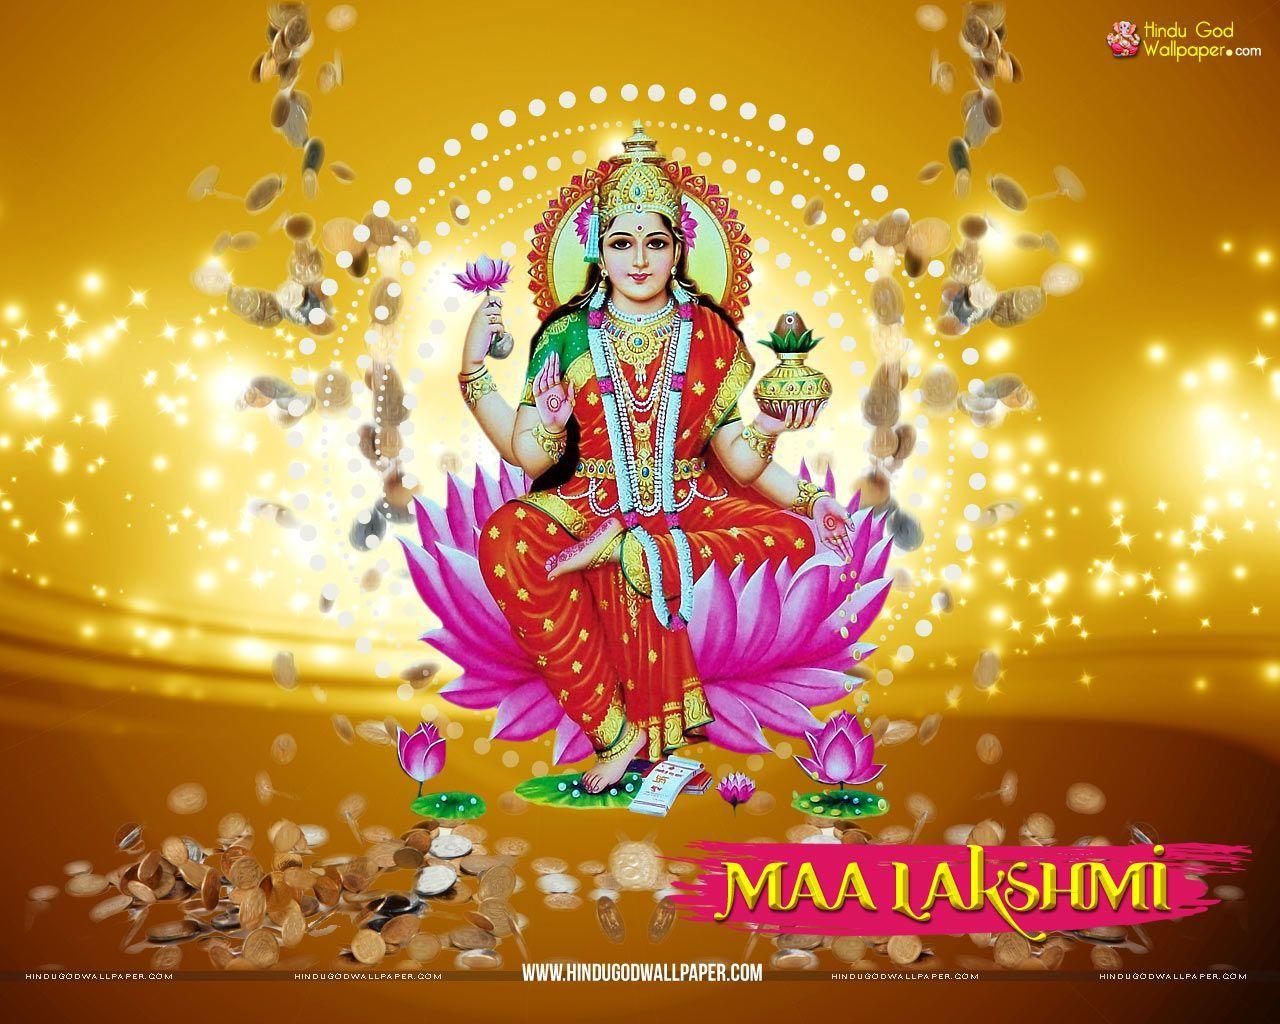 Maa Lakshmi Wallpaper HD Full Size Free Download. Full size in 2019